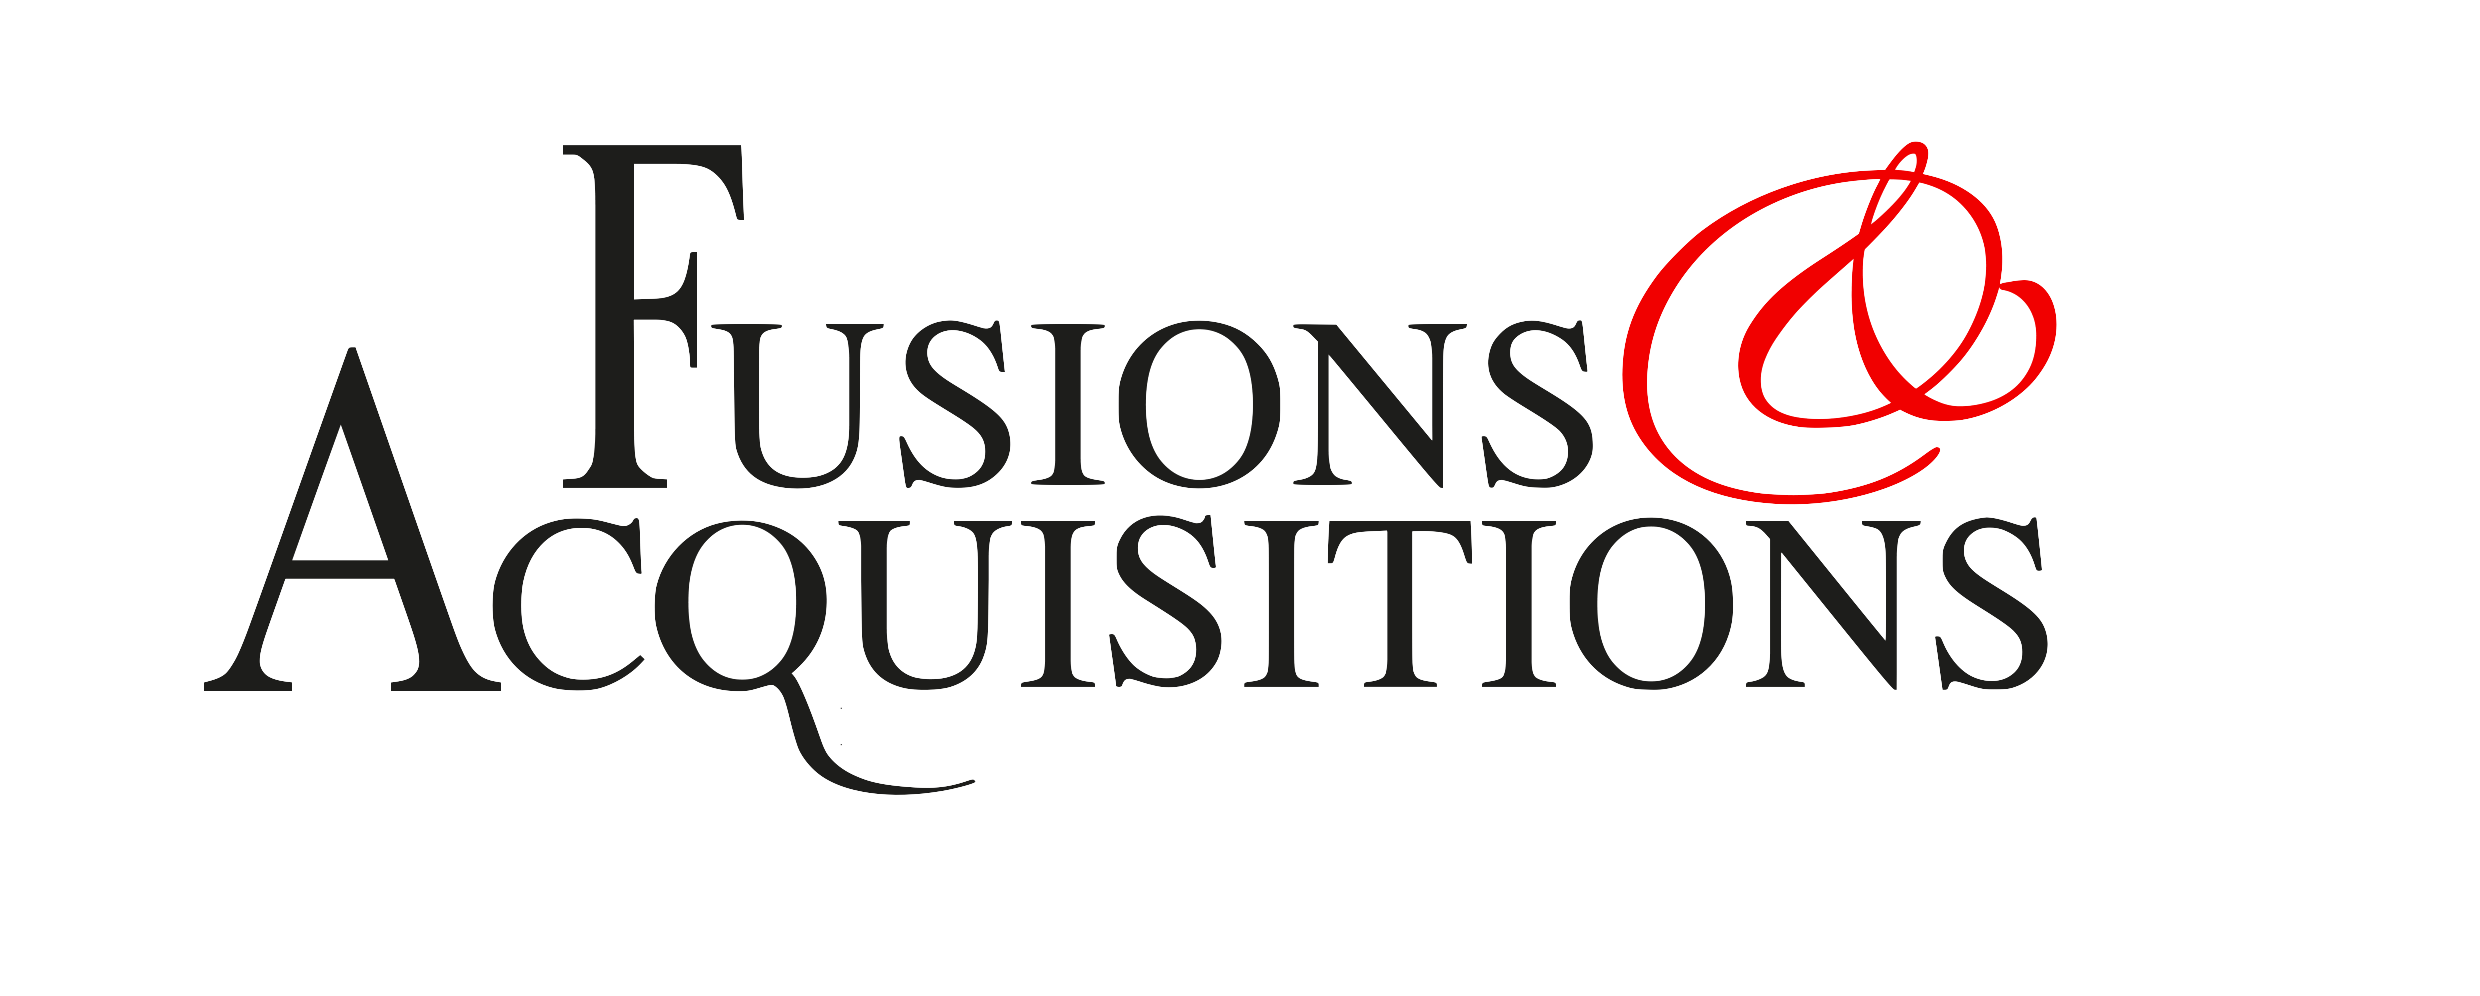 Epsilon-Research - Fusions & Acquisitions Magazine Logo